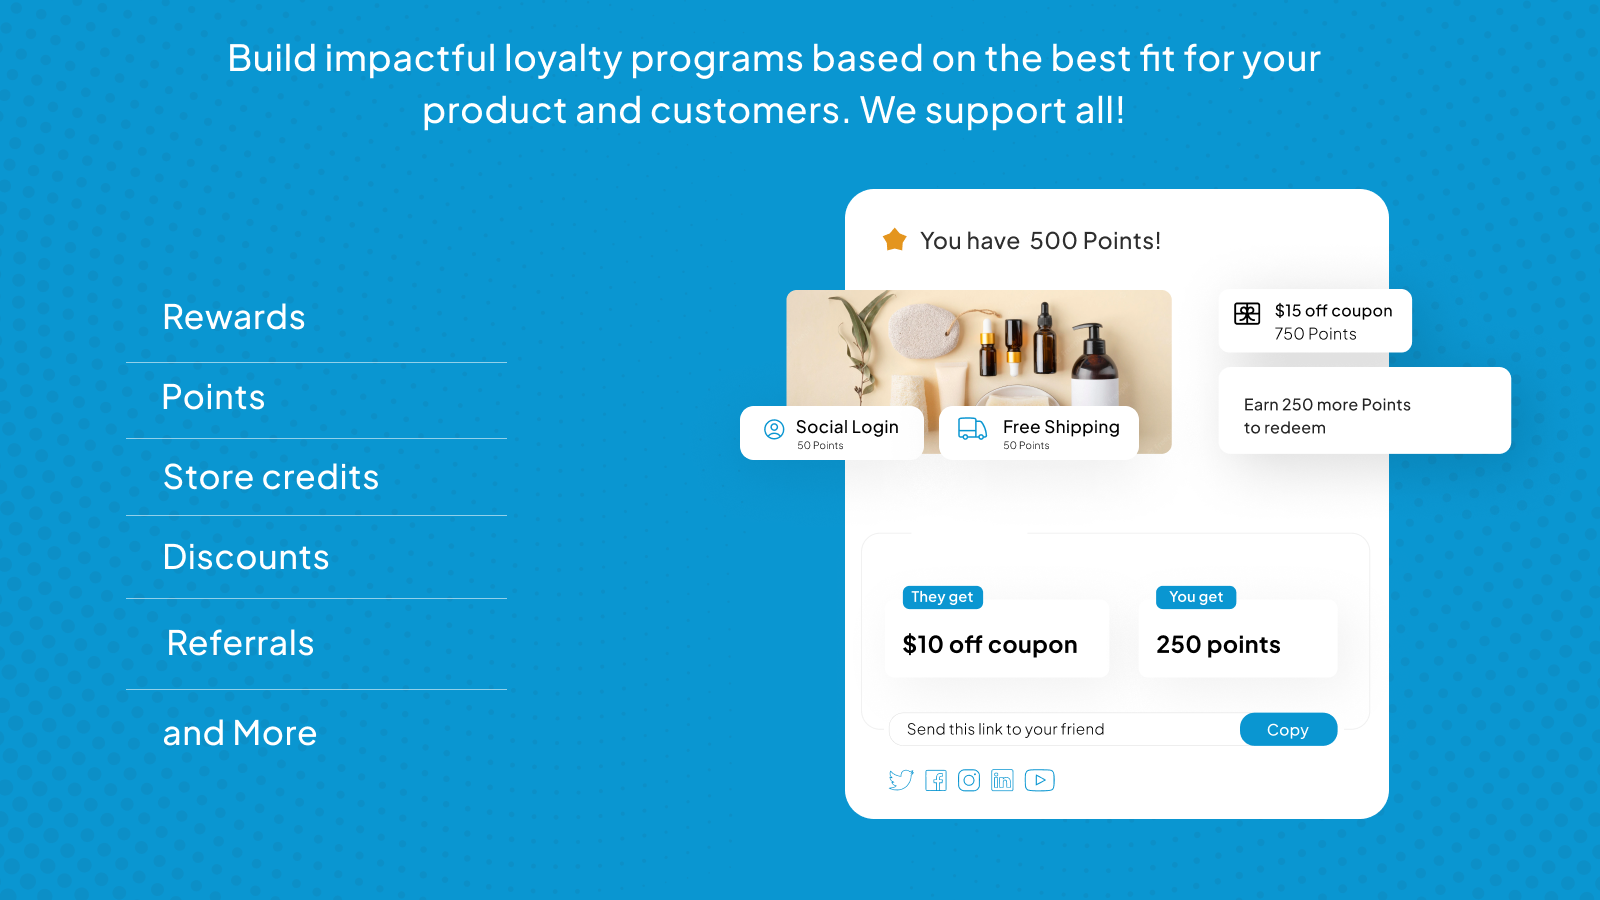 Bouw impactvolle loyaliteits- & beloningsprogramma's.